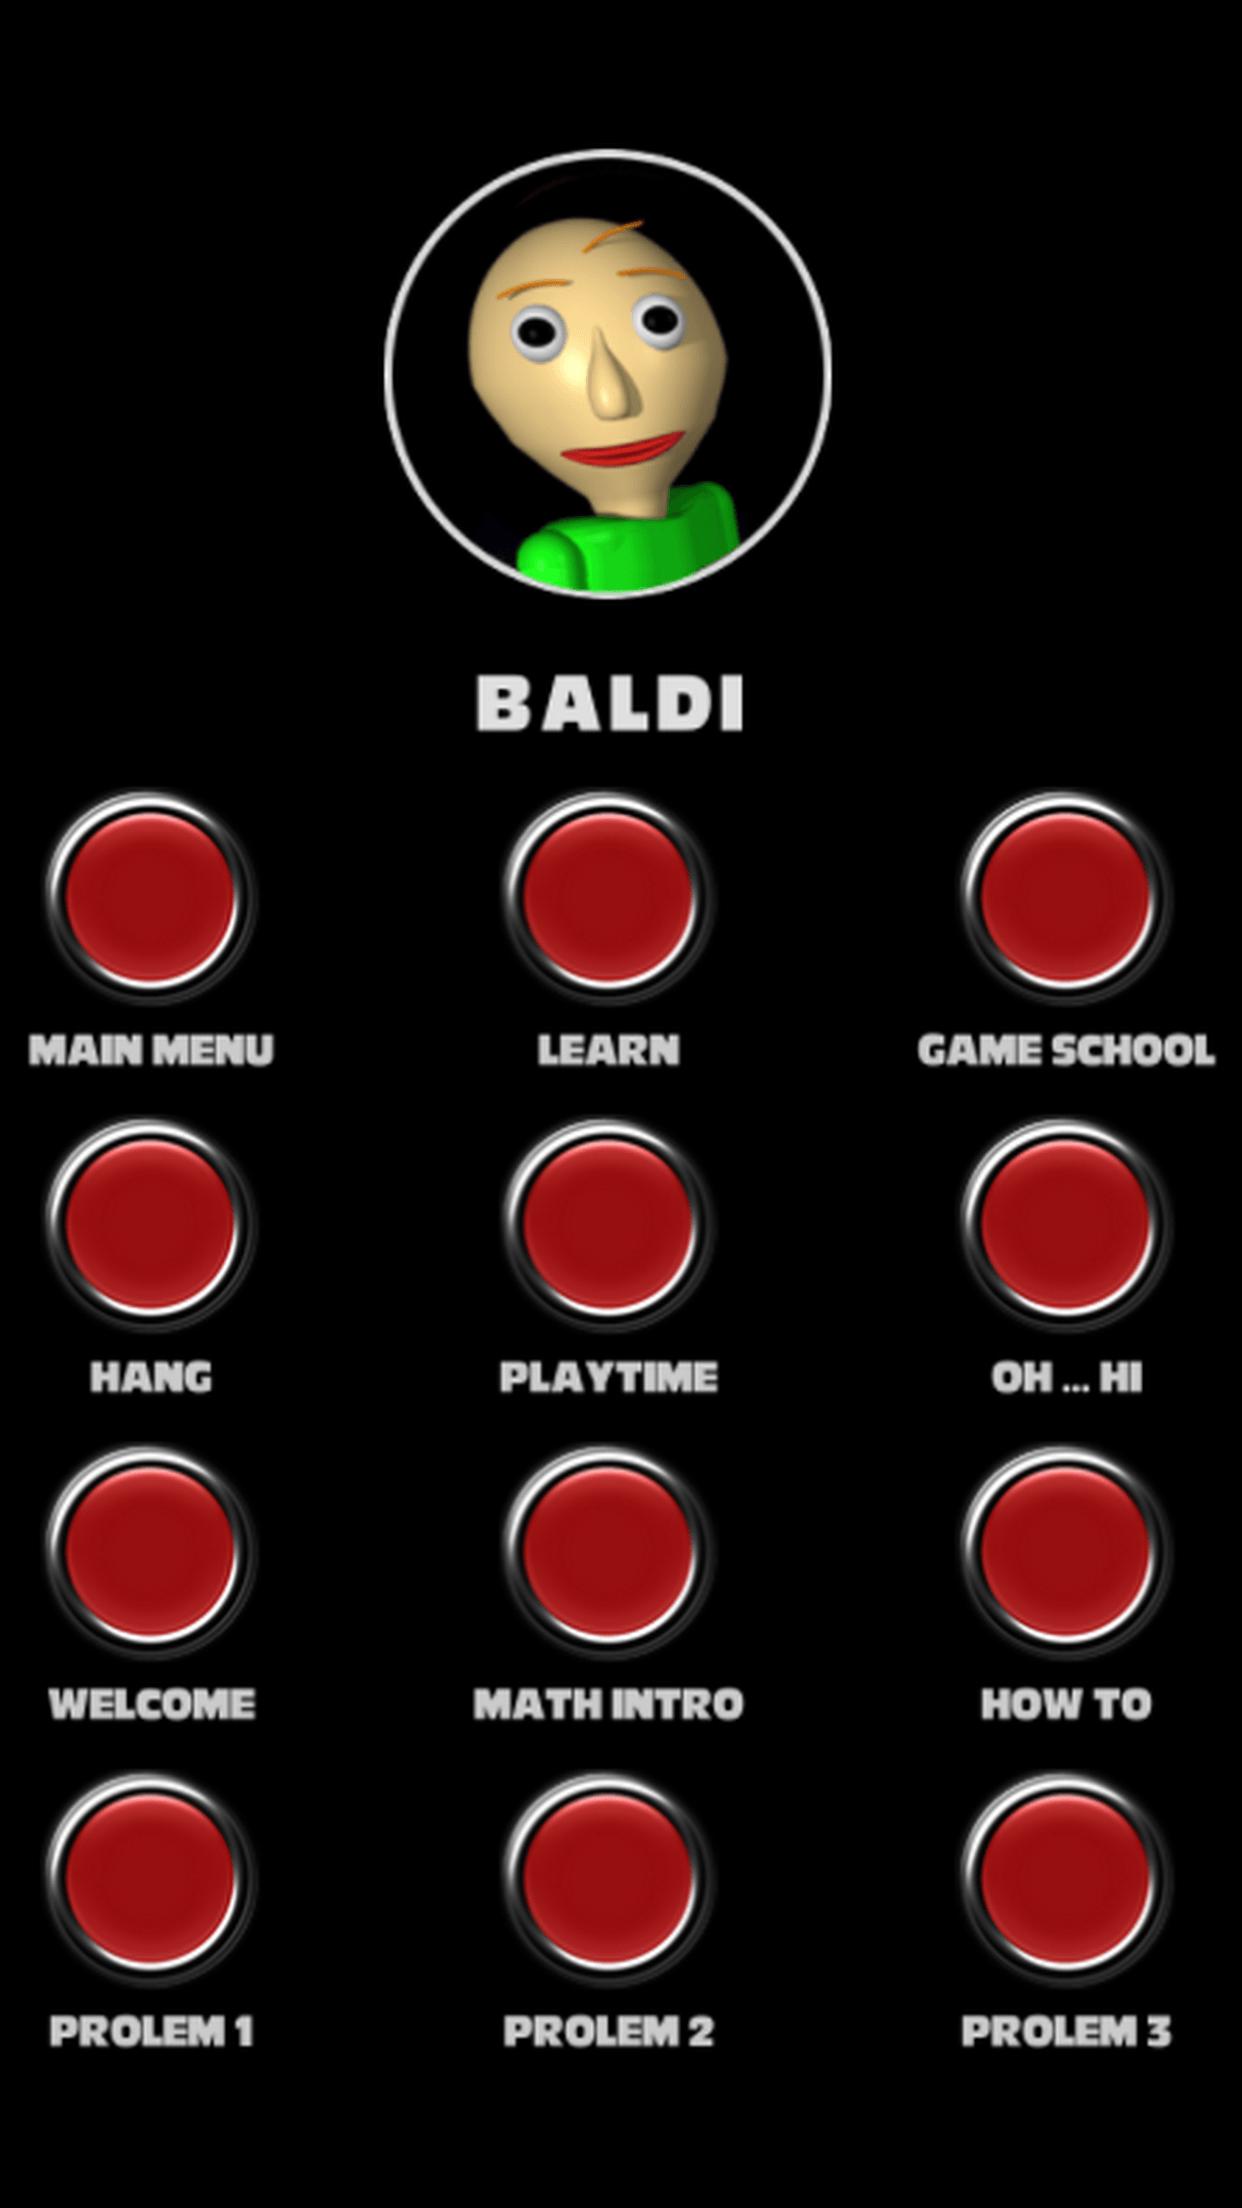 Baldi Basics Soundboard. Scratch Baldi Basics Soundboard. Baldis Basics Sound Board Plus Edition part1. Cloudy Copter Voices Baldi Basics Soundboard.